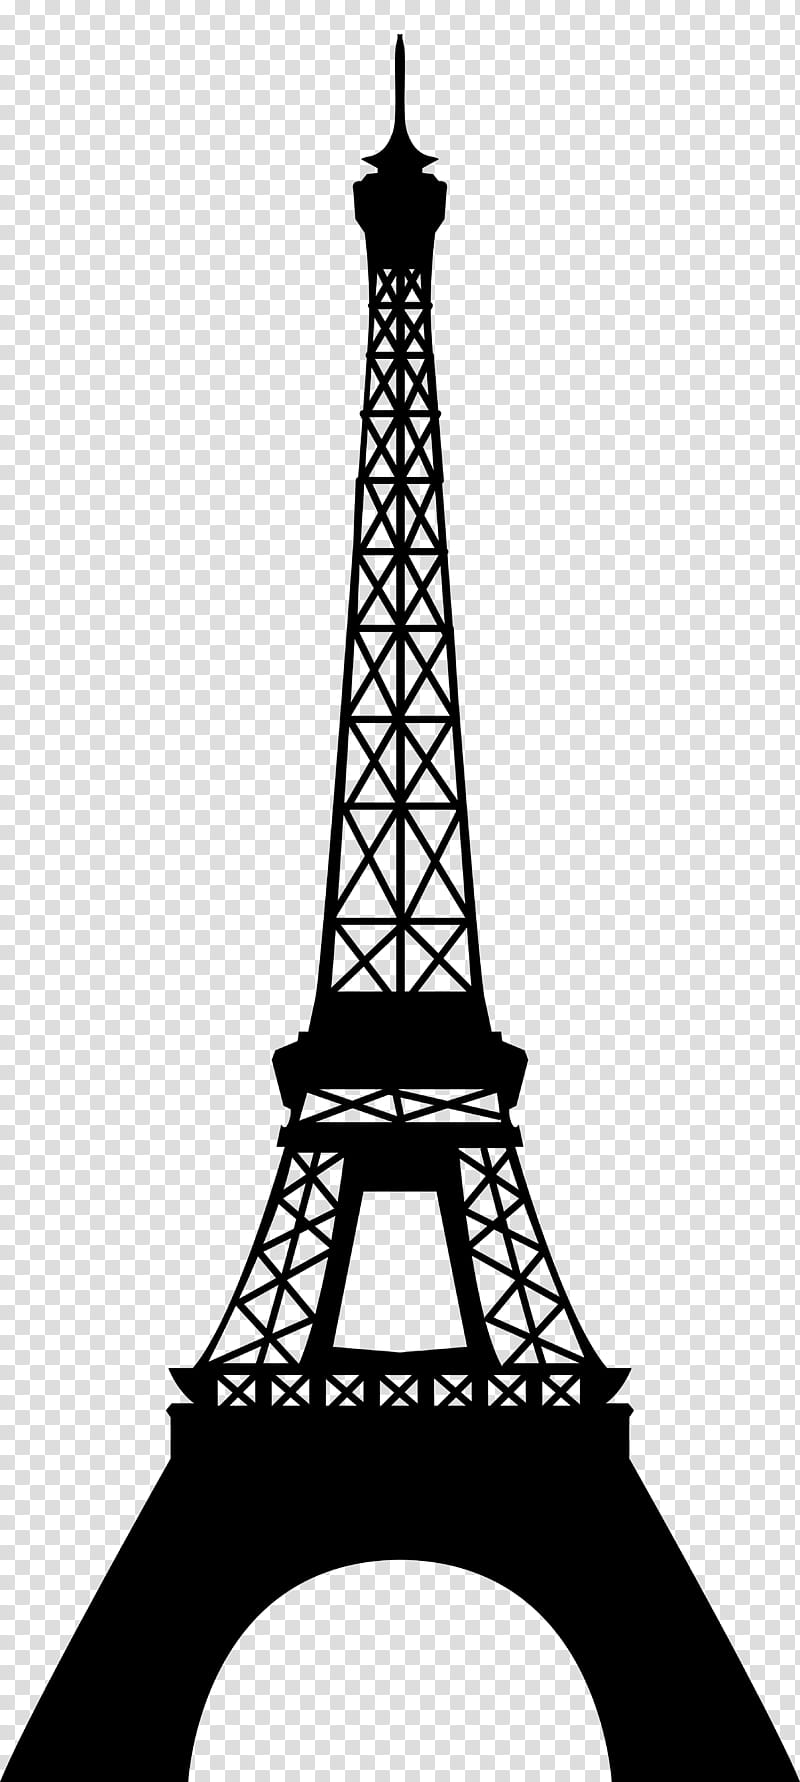 Eiffel Tower, Silhouette, Paris, Landmark, Obelisk, Monument, National Historic Landmark, Spire transparent background PNG clipart